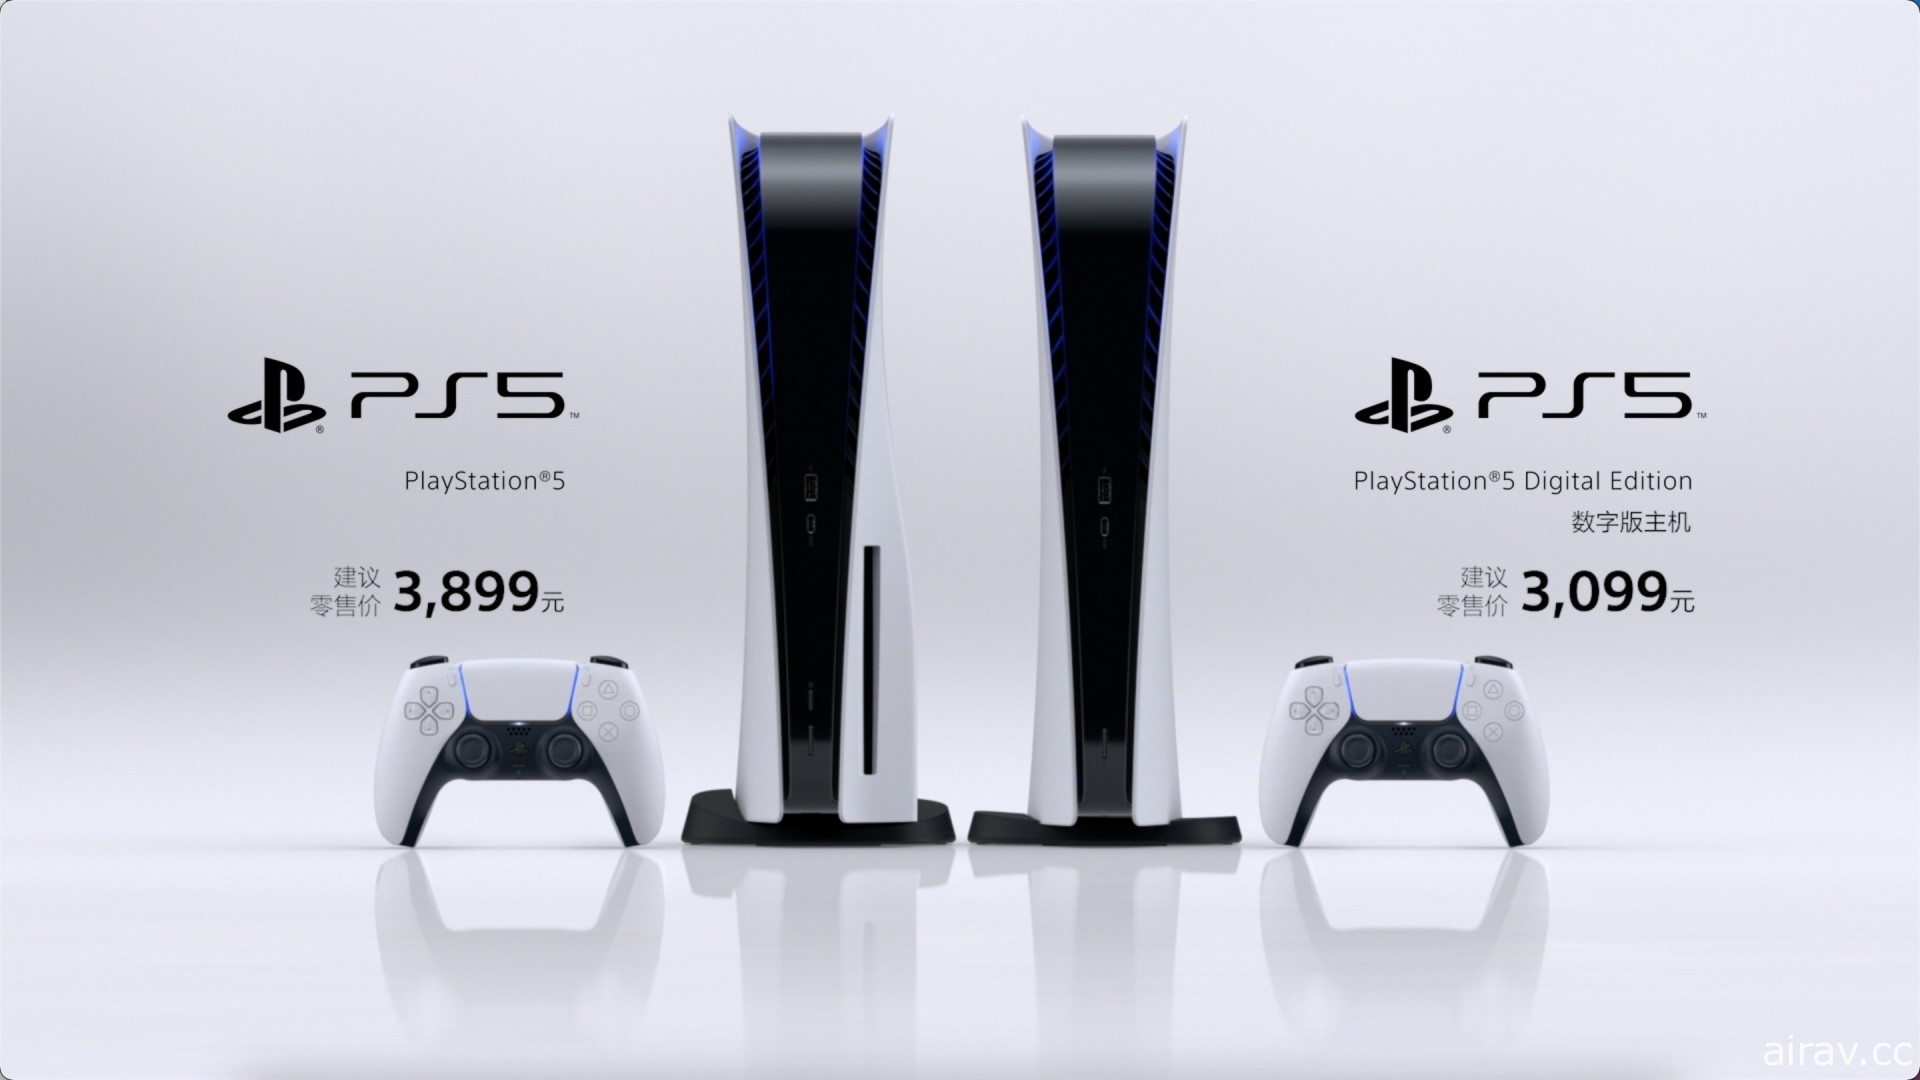 SIE 上海宣布 PlayStation 5 将于 5 月 15 日在中国正式推出